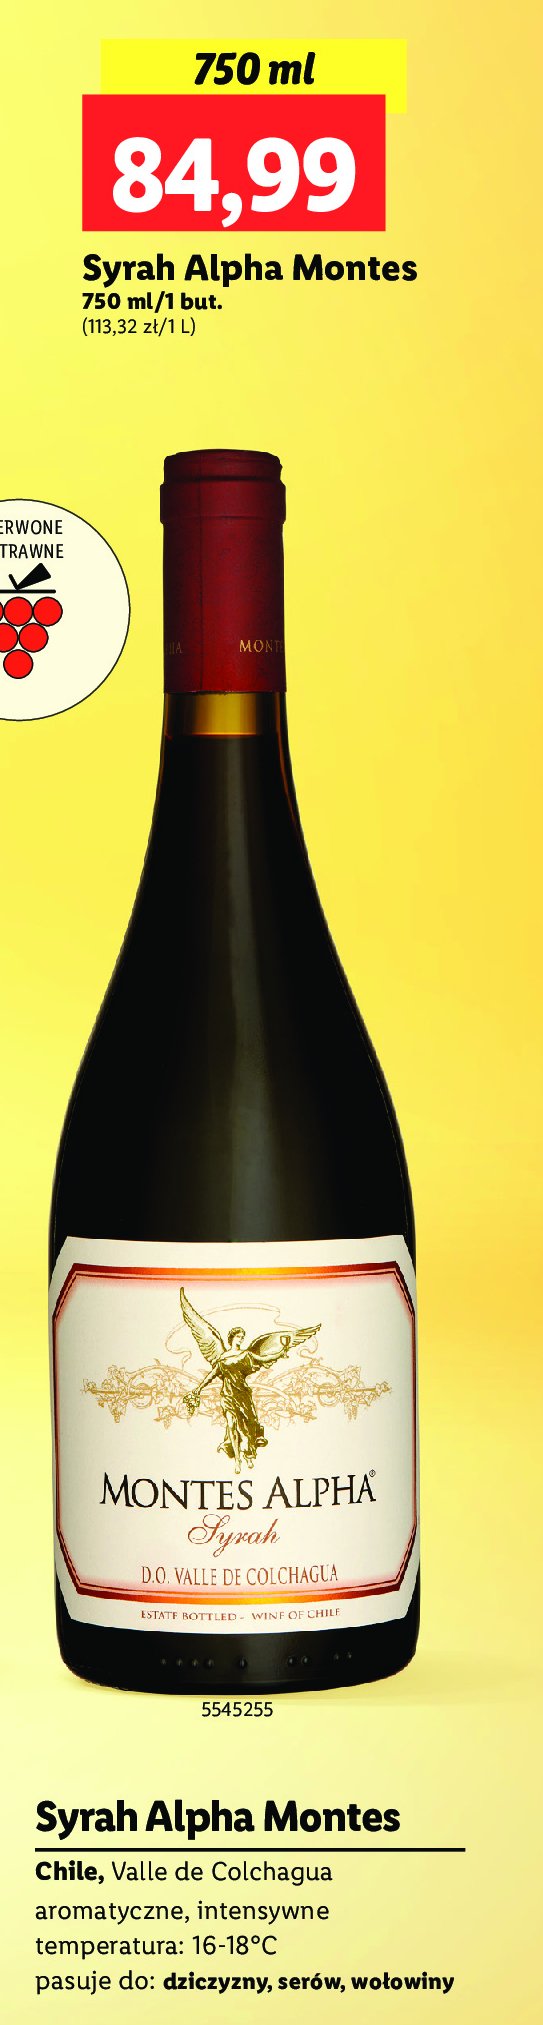 Wino Montes alpha syrah promocja